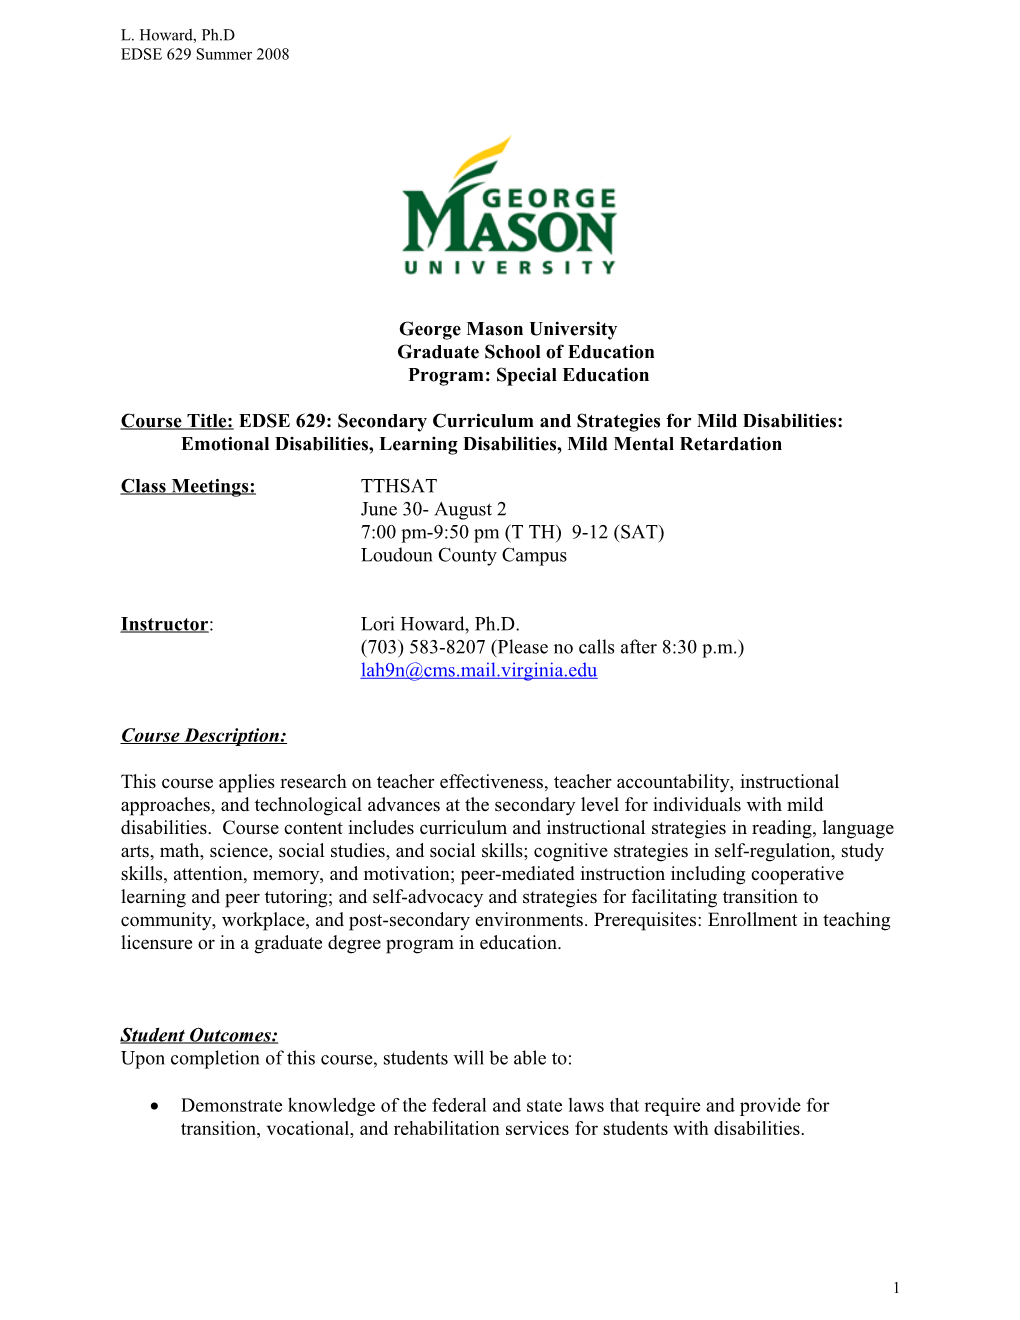 George Mason University Graduate School of Education Program: Special Education s1